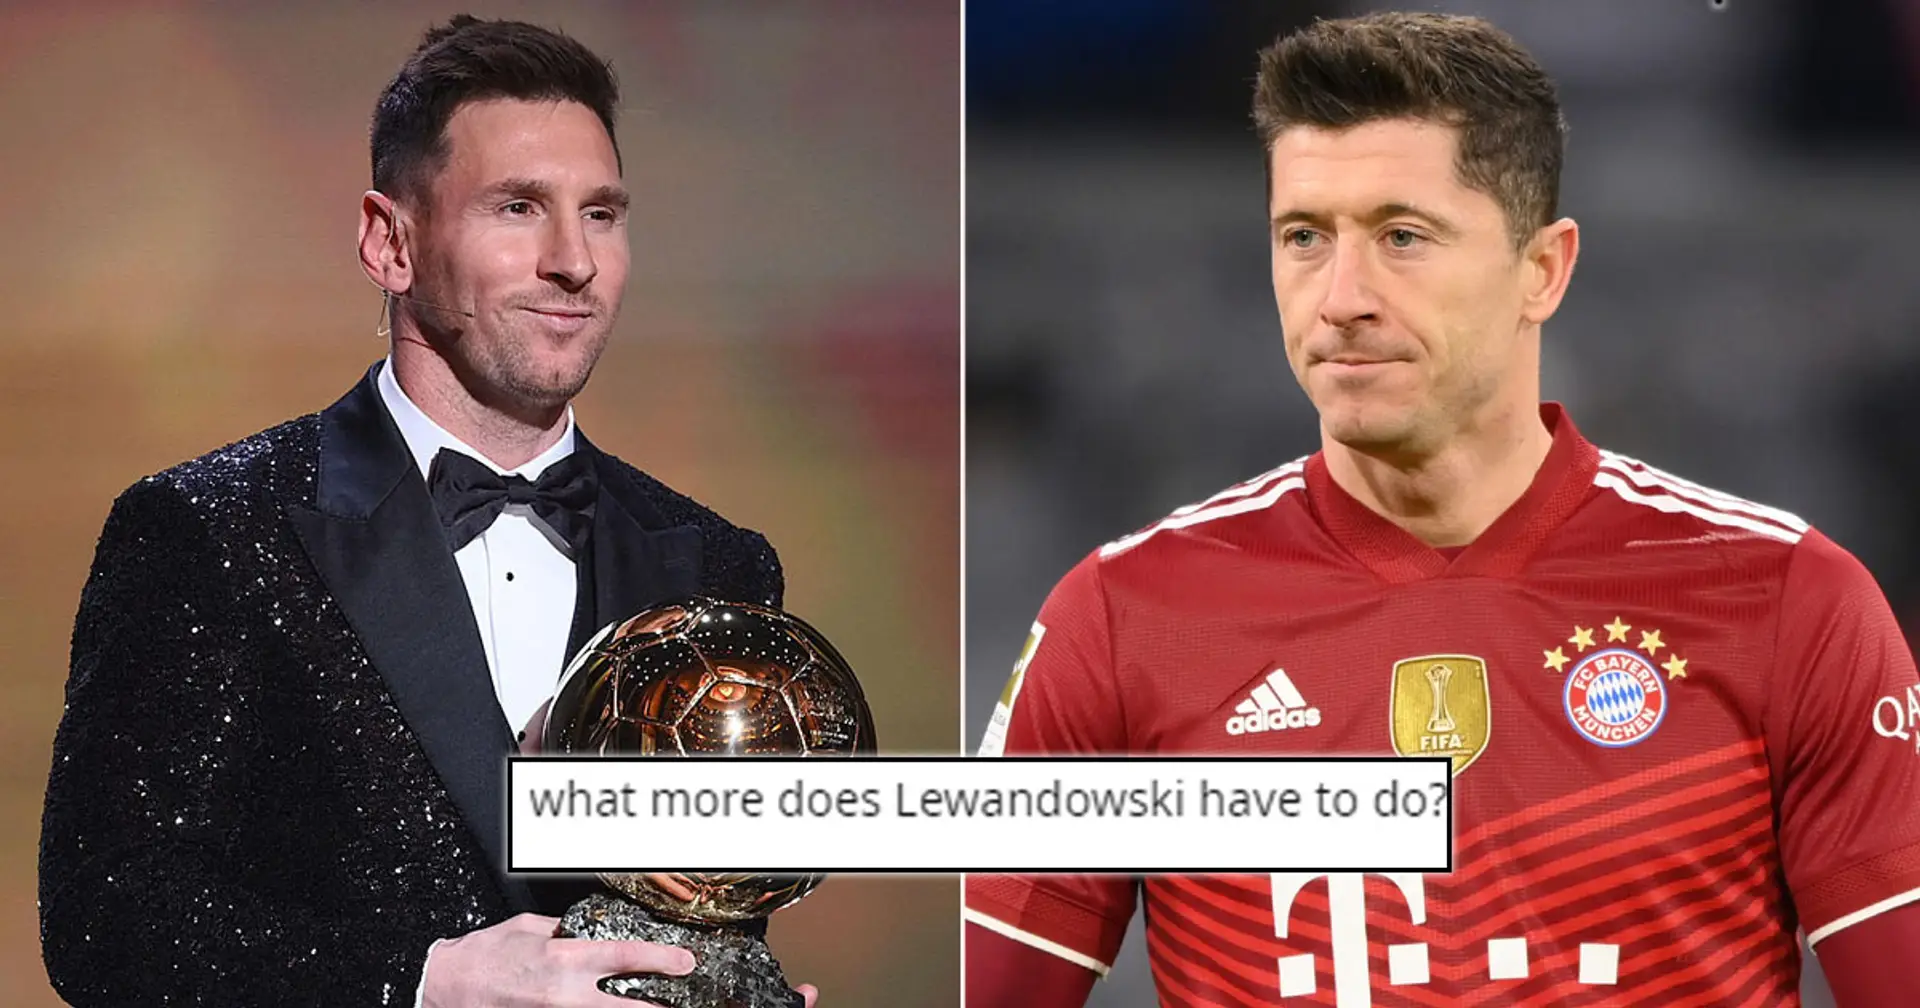 'Lewandowski robbed': Fans react to Leo Messi winning Ballon d'Or award